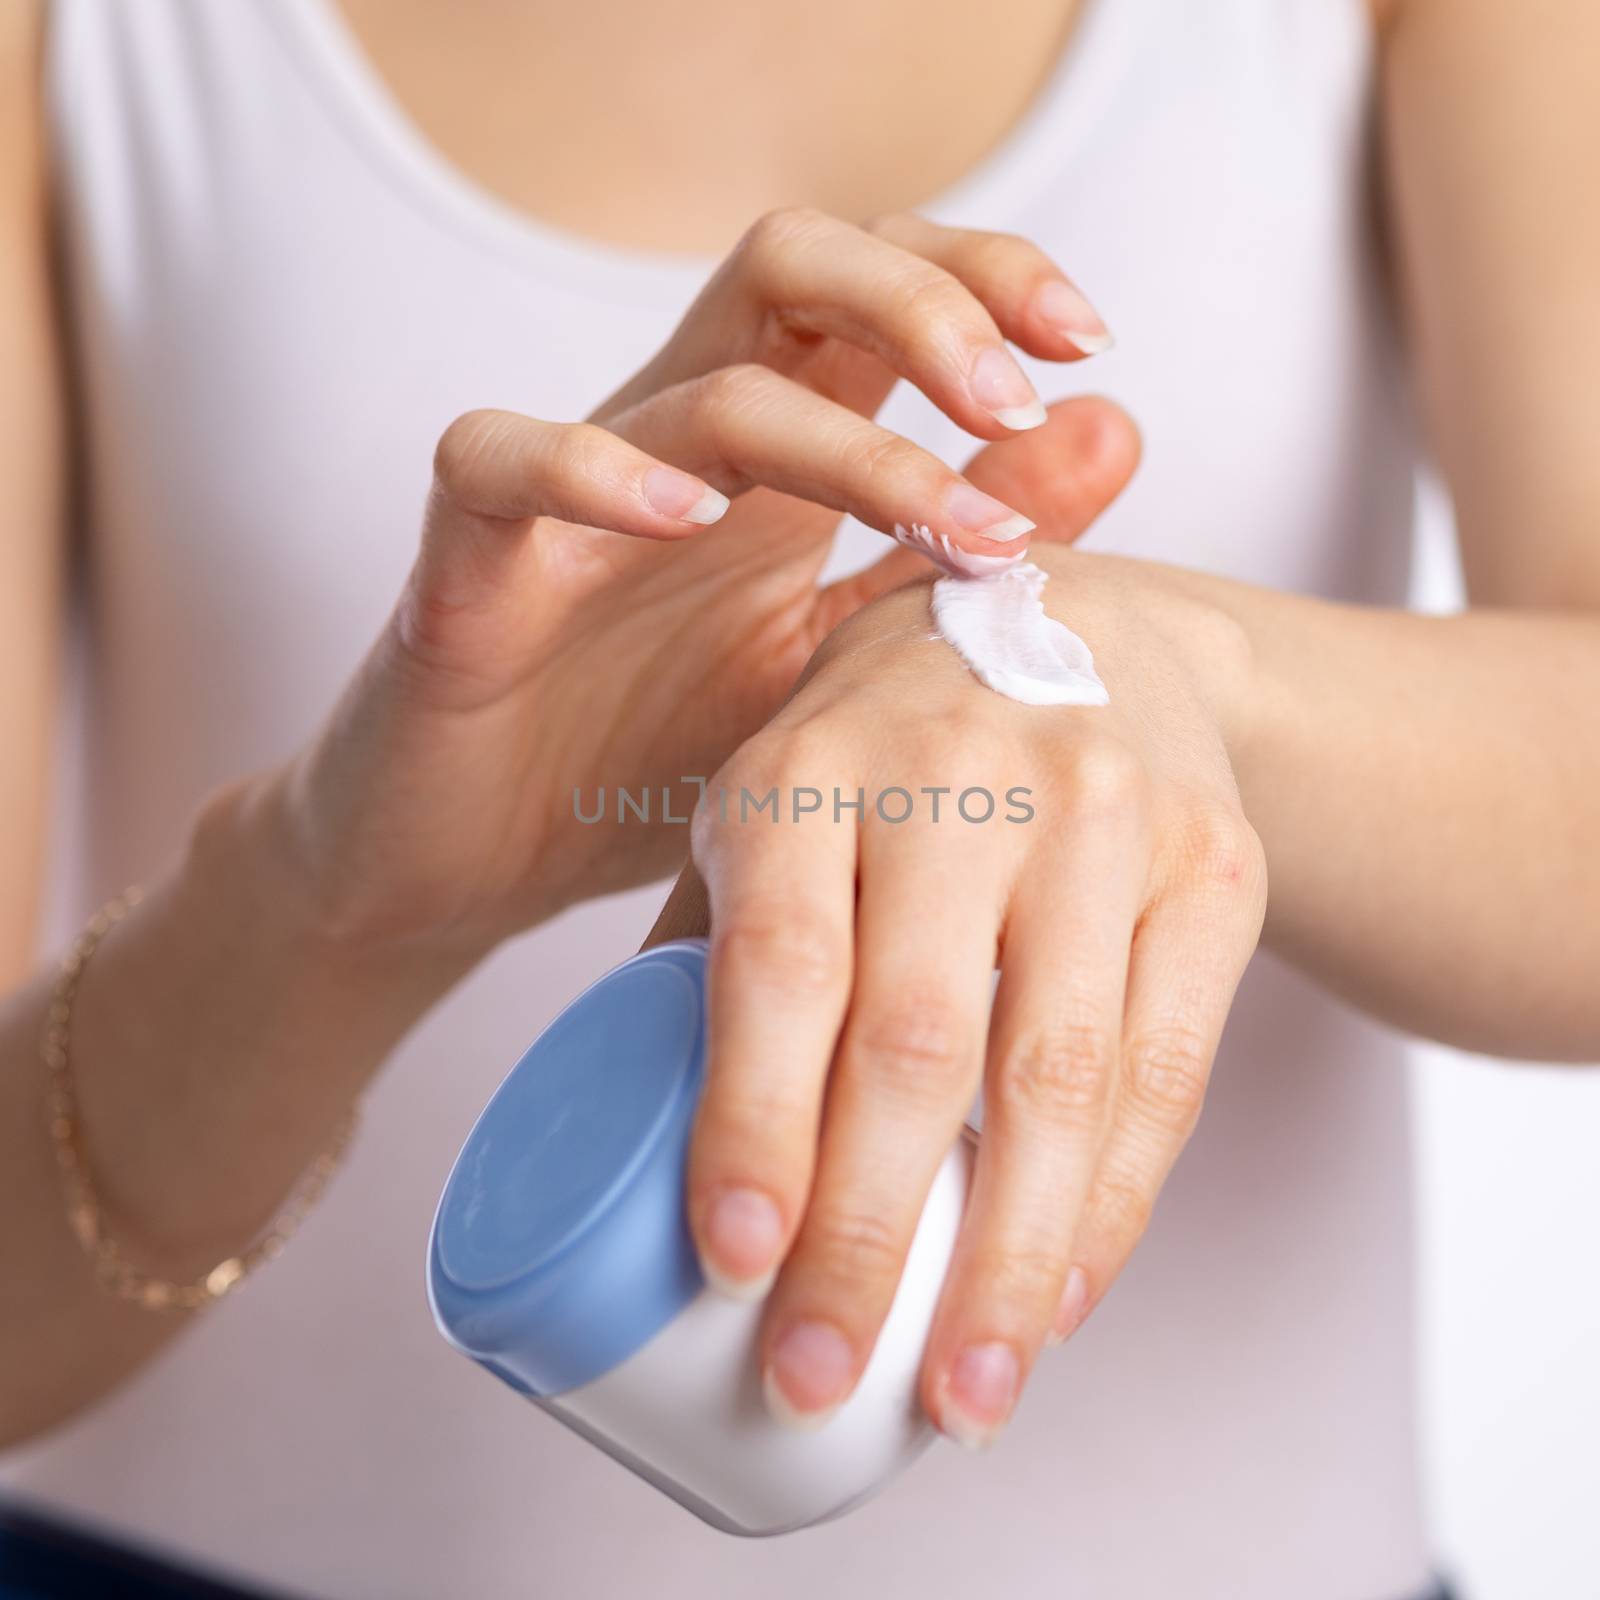 Woman applying hand cream to moisturize skin - stock photo by adamr